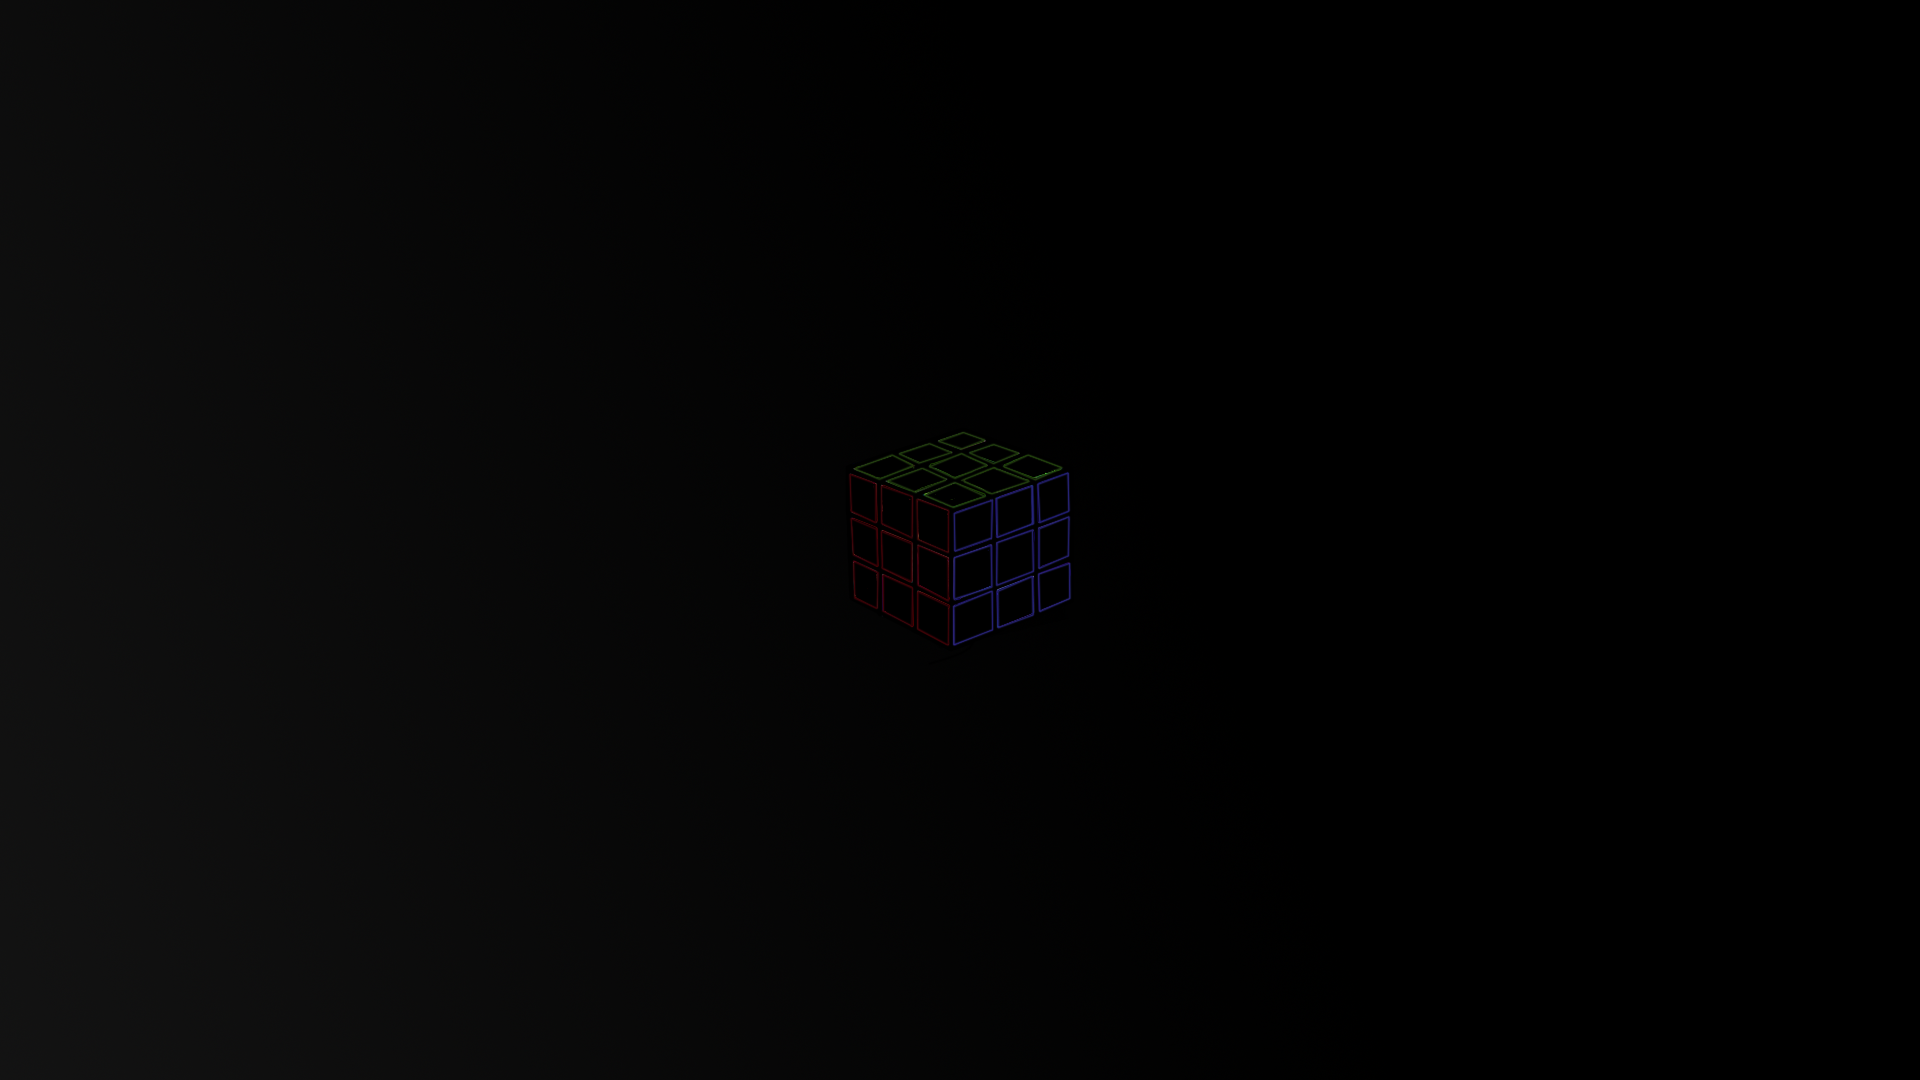 General 1920x1080 cube photoshopped minimalism black background CGI 3D Abstract 3D Blocks simple background Rubik's Cube